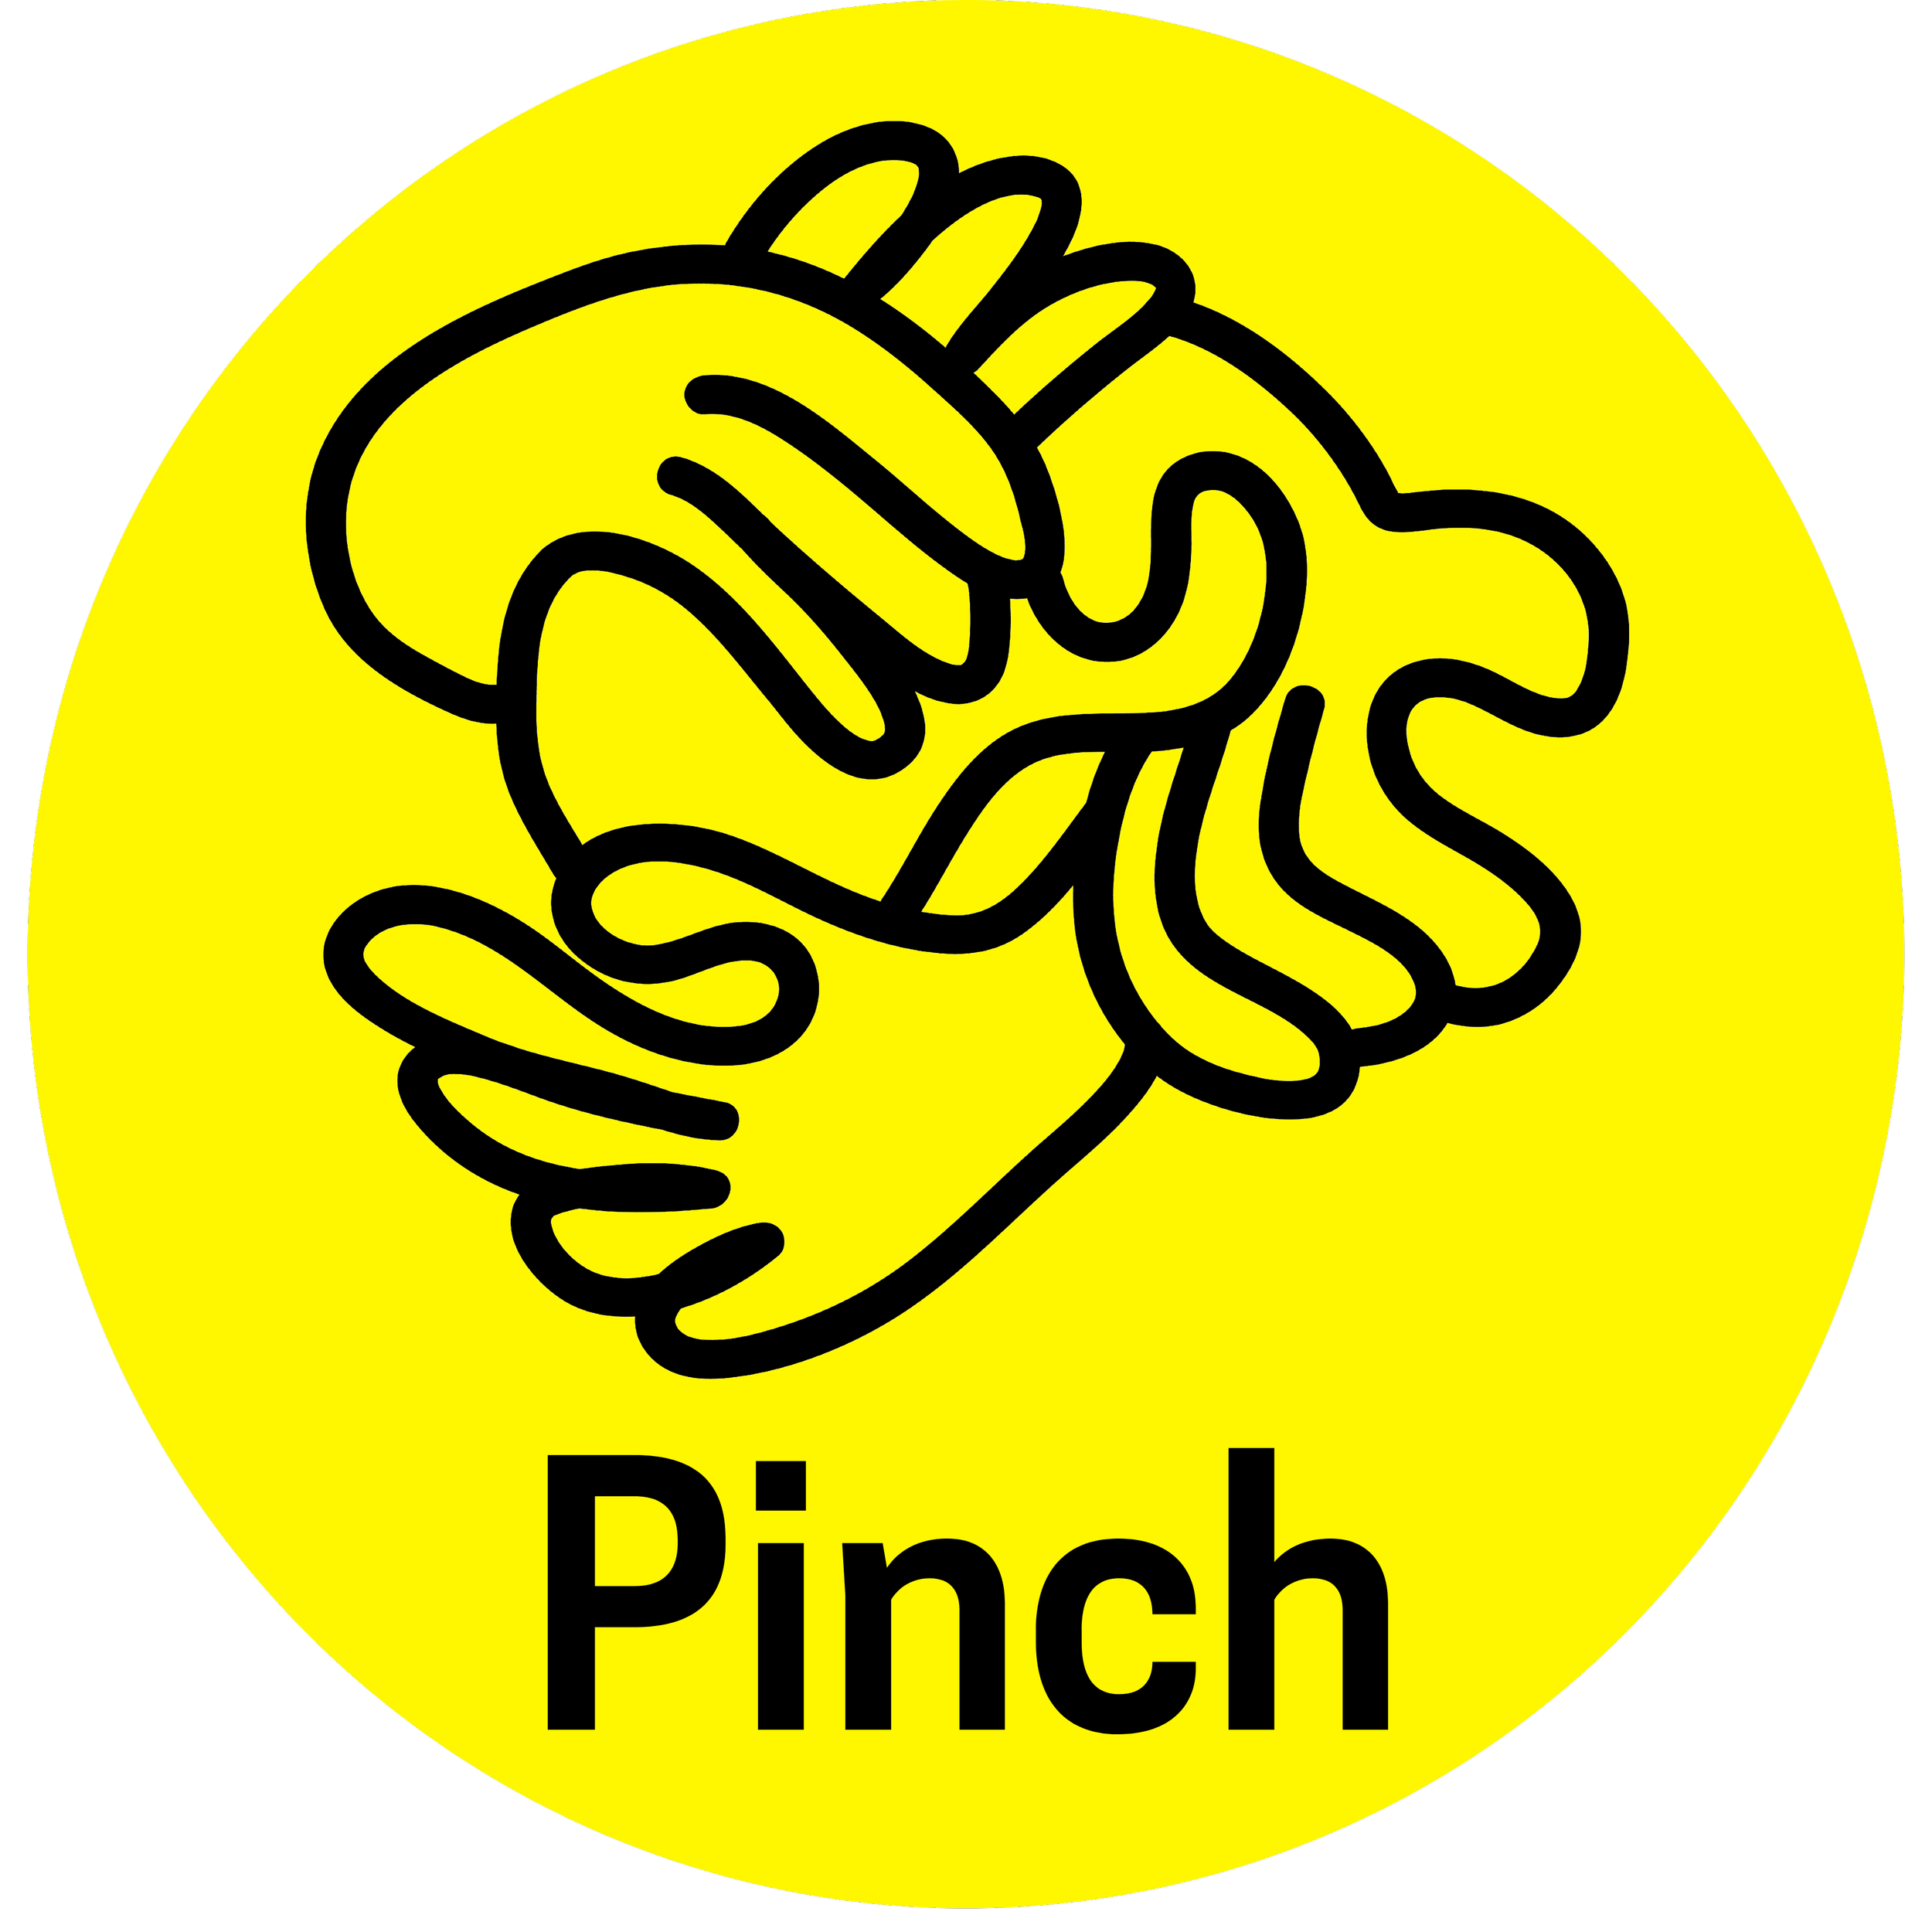 Pinch logo yellow.png